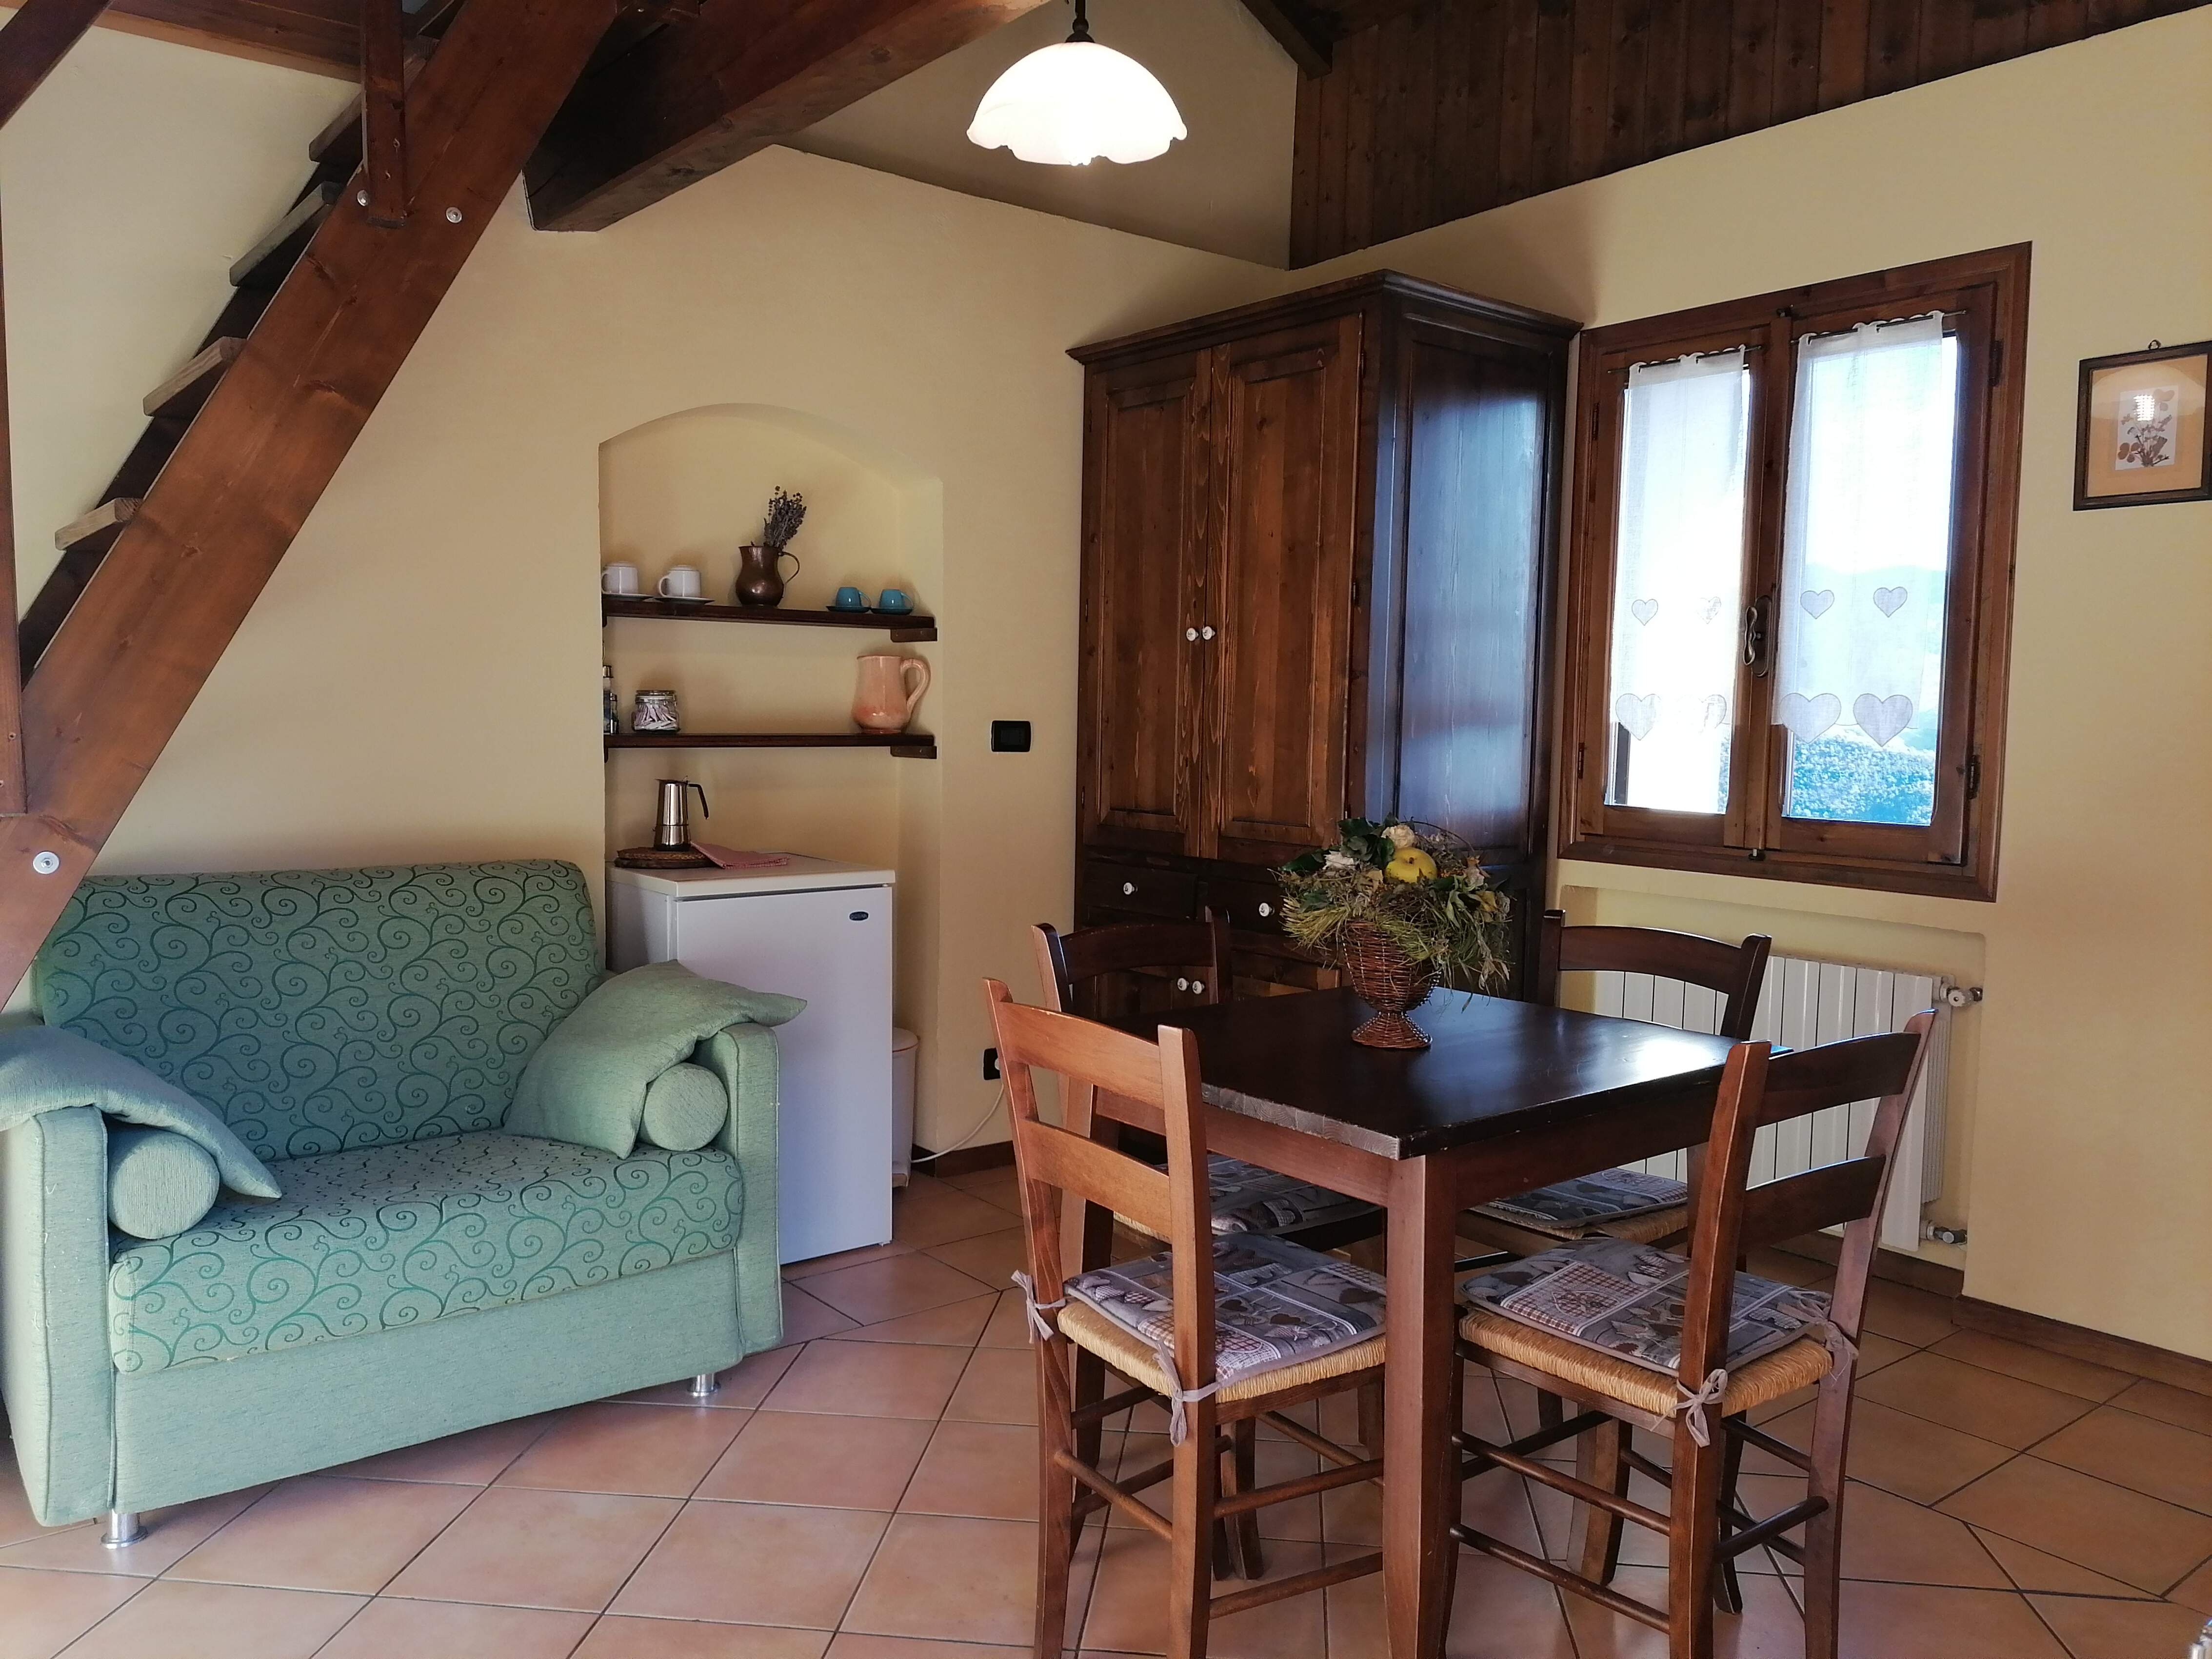 The Porcupine - living room - farmhouse in Pigna - Imperia - Liguria